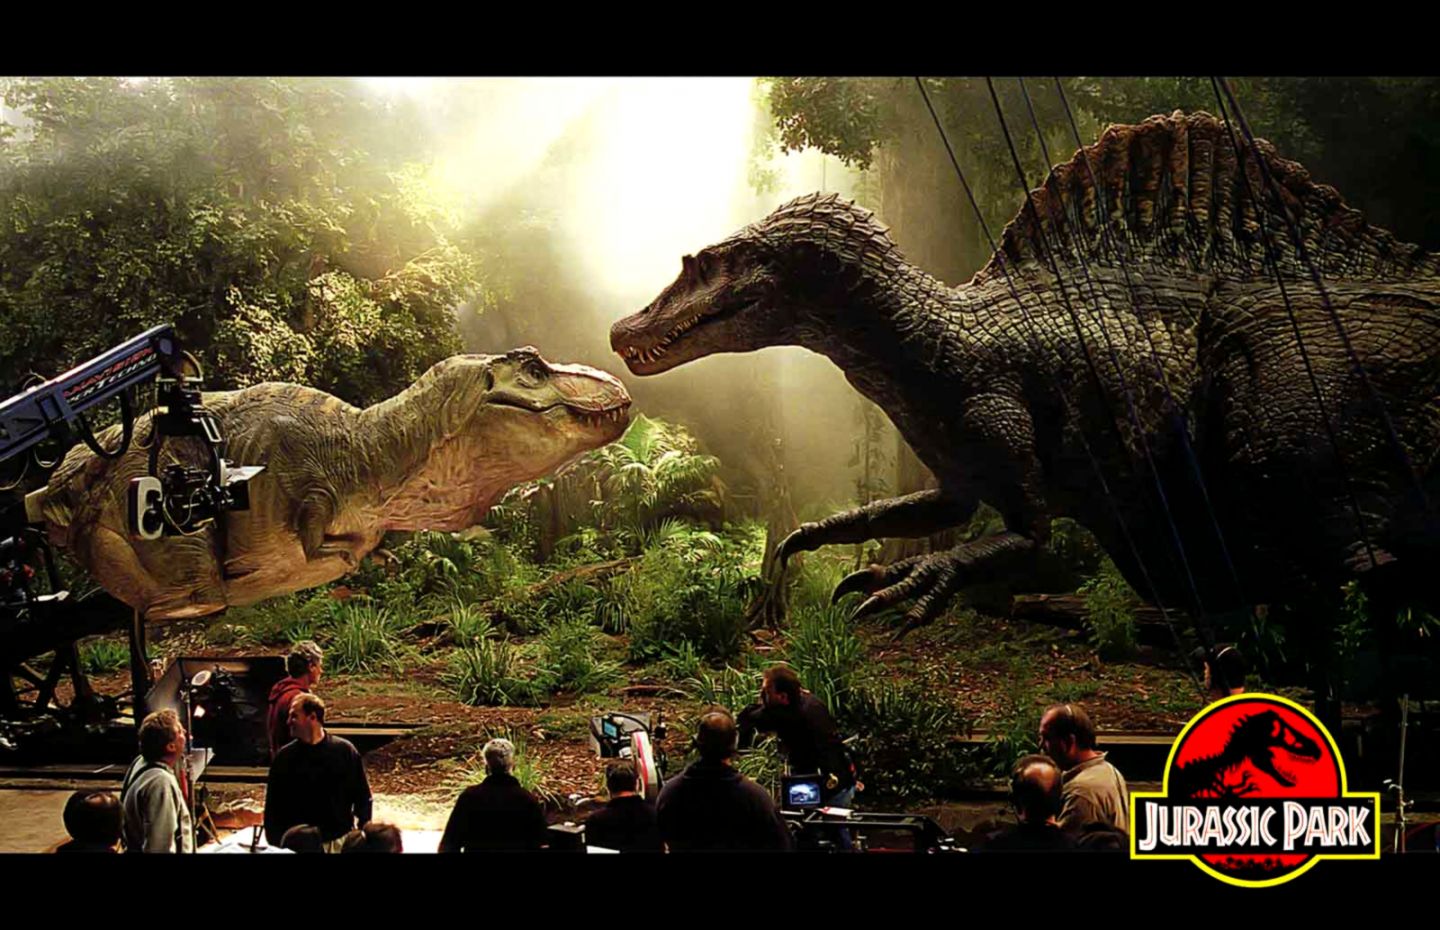 Wallpaper Jurassic World 2 el Reino Caido, John Hammond, Jurassic Park,  Dinosaur, Welcome to Jurassic Park, Background - Download Free Image